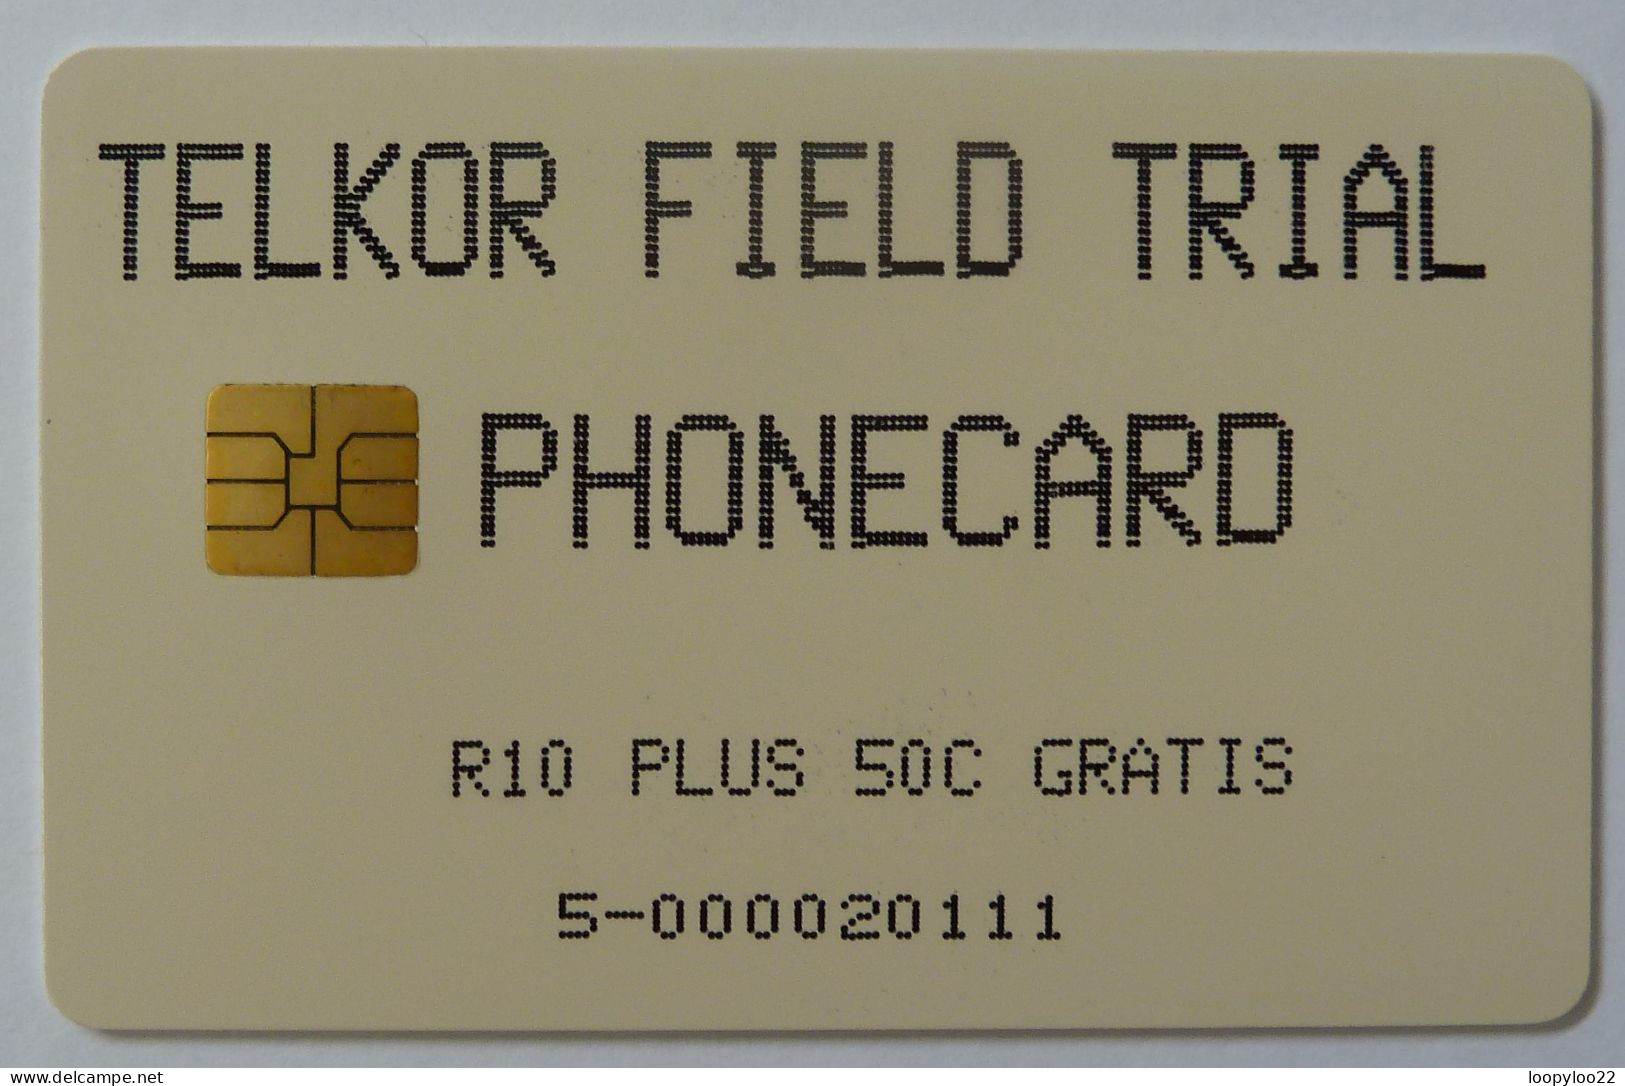 SOUTH AFRICA - Telkor Field Trial - R10 PLus 50c Gratis - 100ex - RRR - Suráfrica